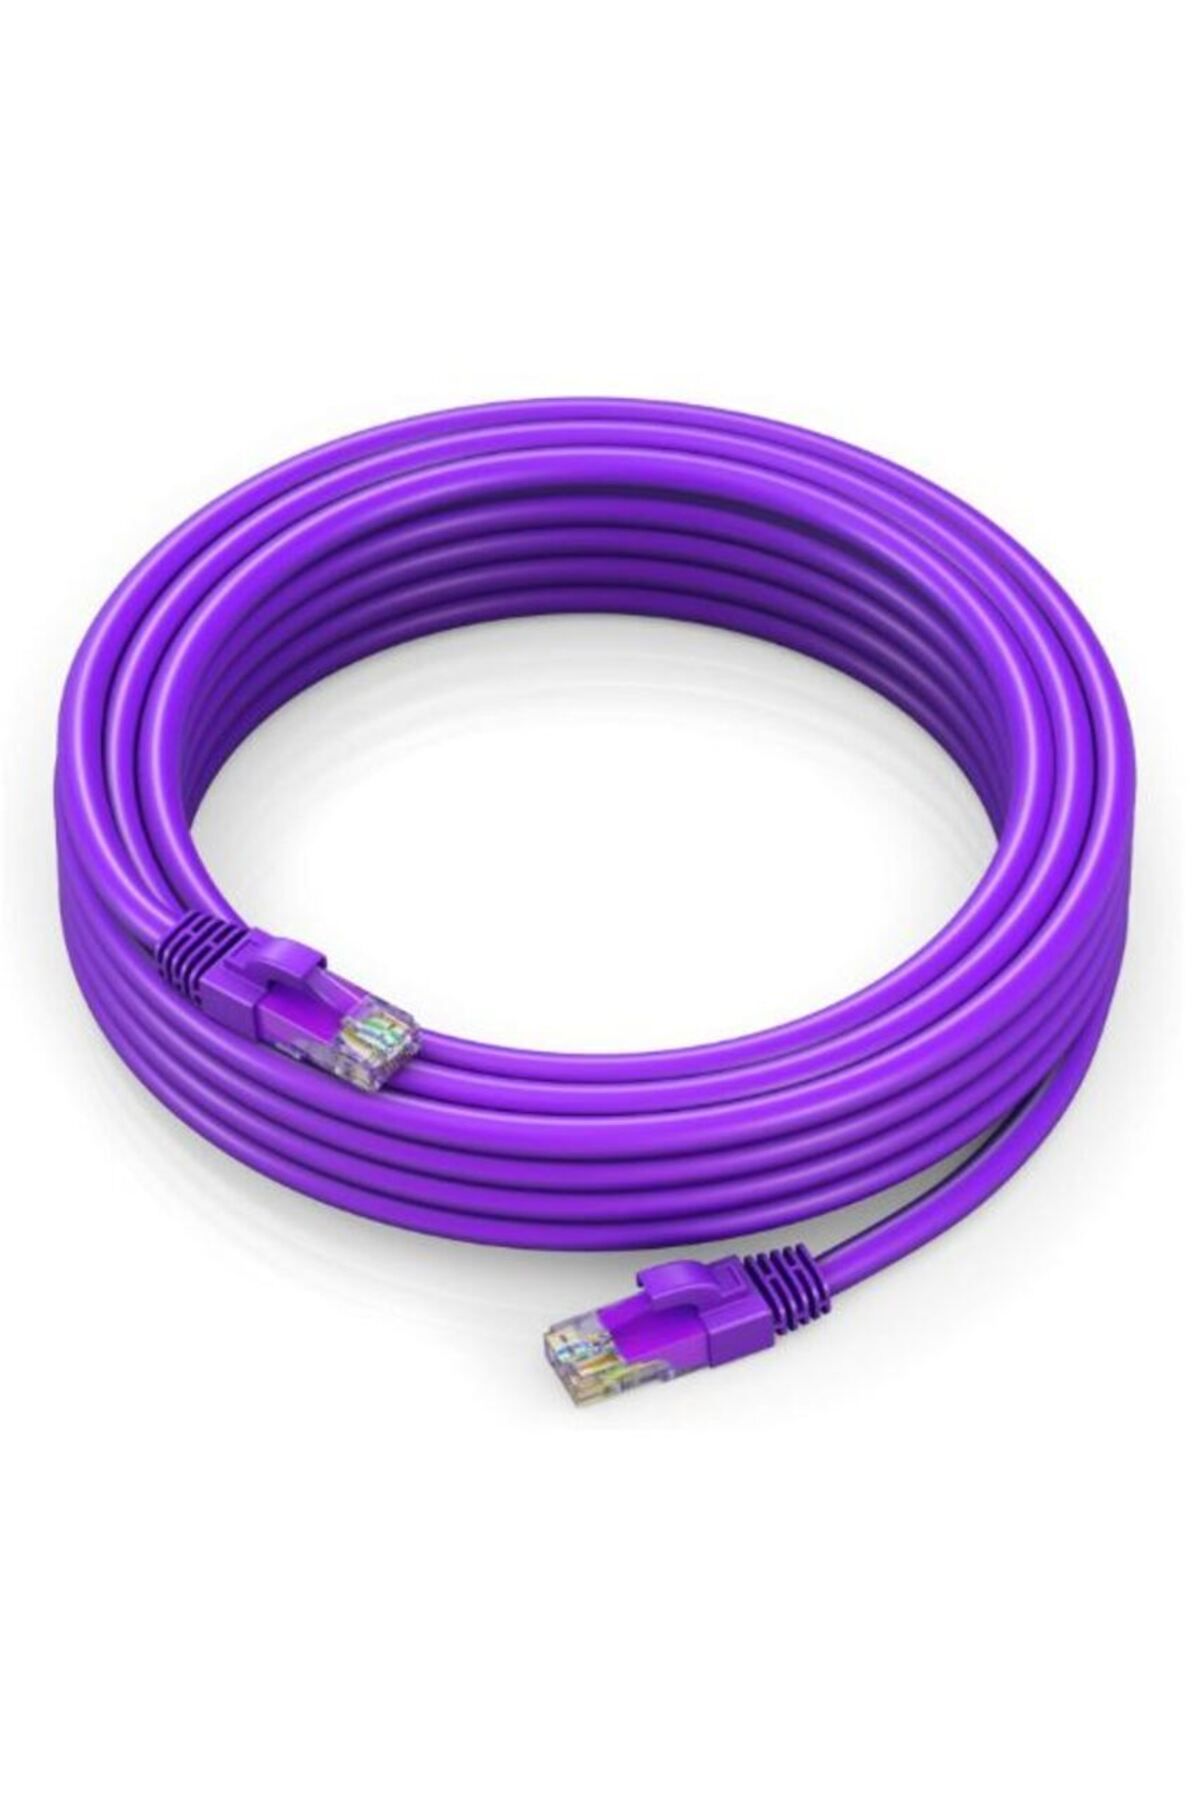 CANOVATE Bakır Patch Kablo Cat6a Utp 1mt Lszh Purple Patch Cord Korumasız 2 Yıl Garantili 5 Adet